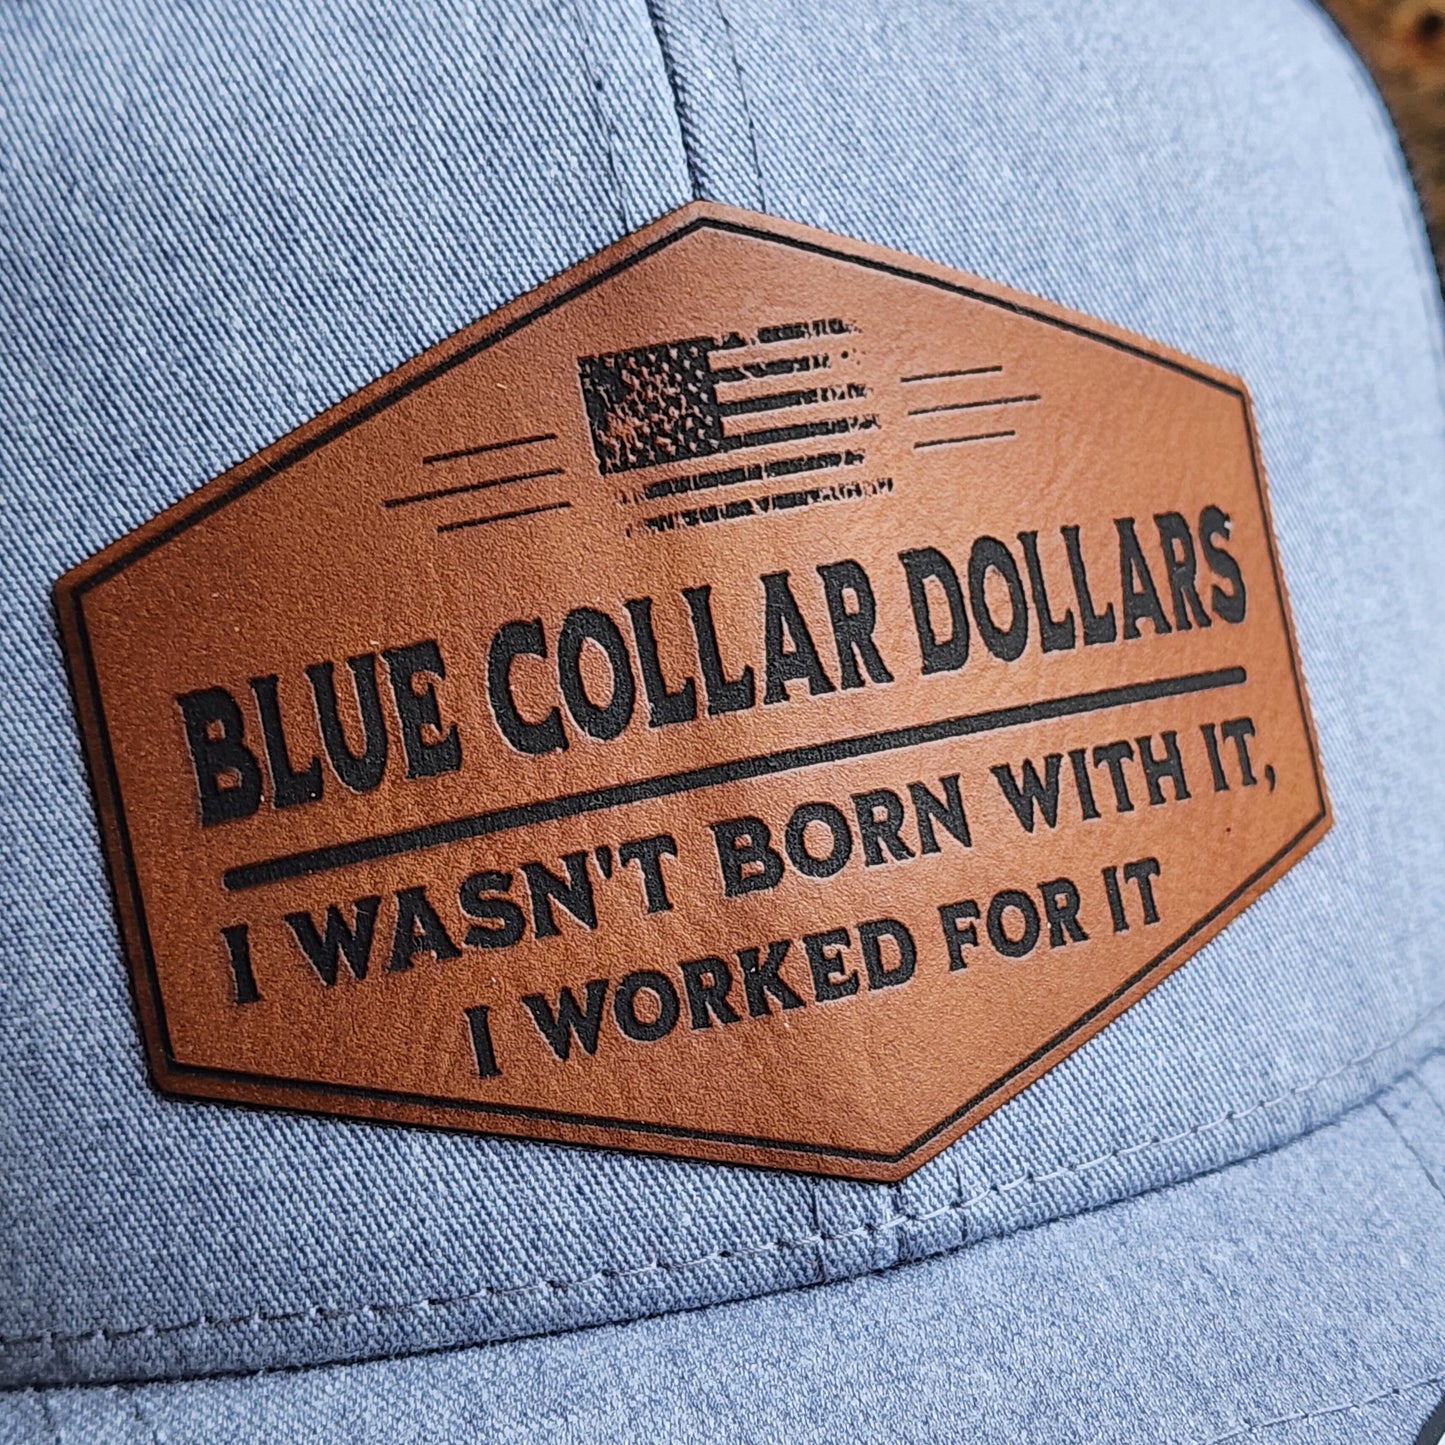 Blue Collar Dollars Trucker Hat